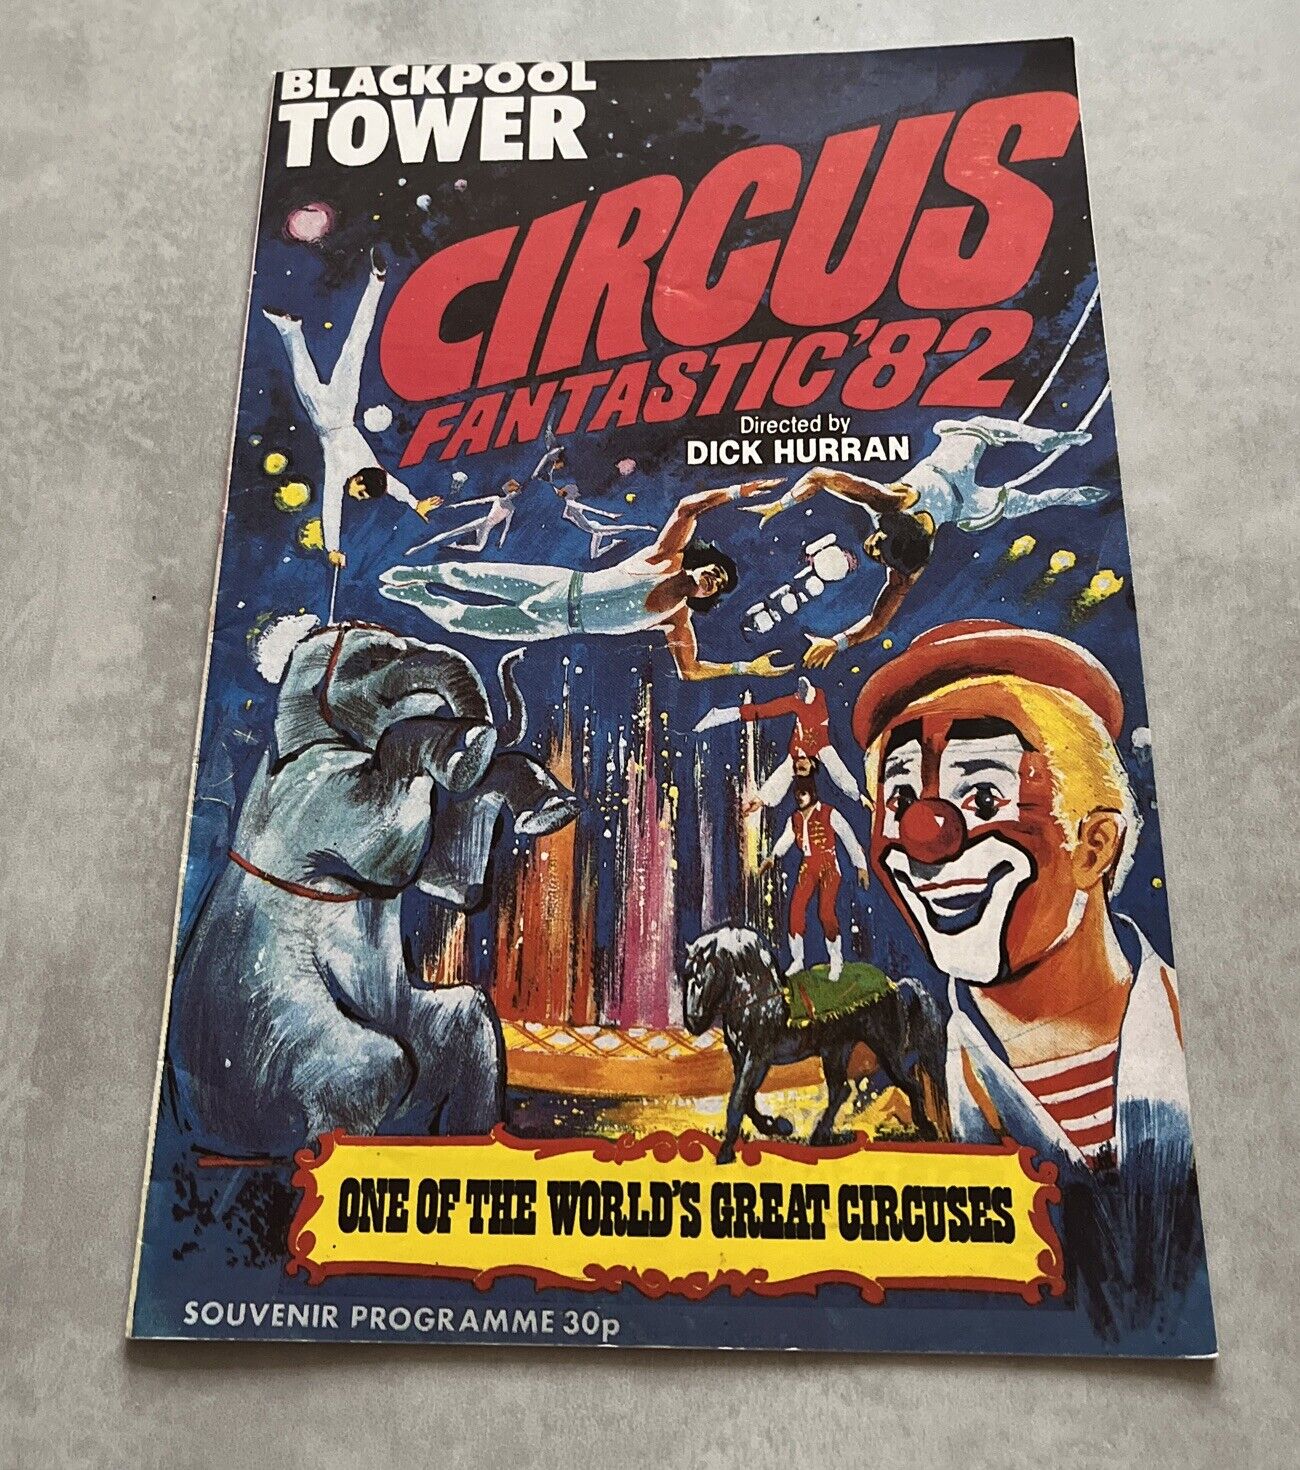 Blackpool Tower Circus Fantastic 82 - Programme (40)